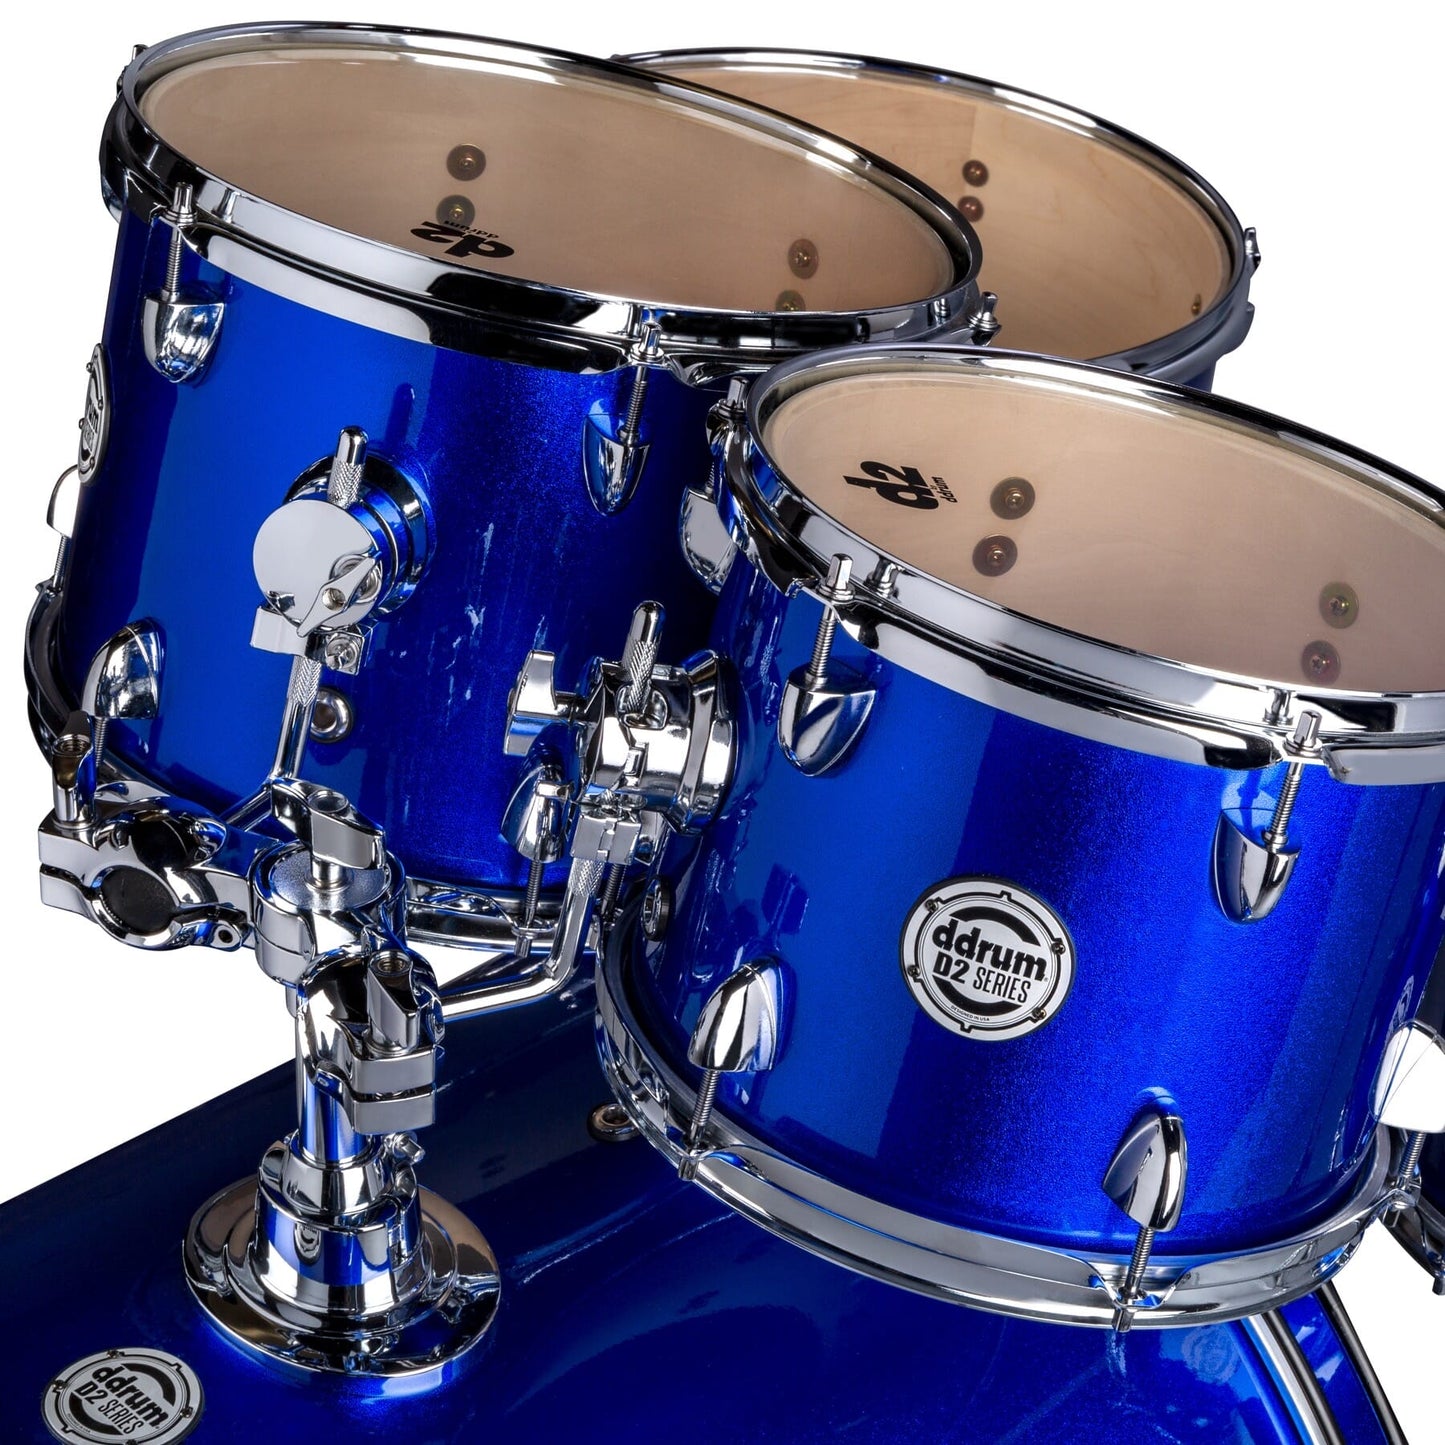 ddrum D2 522 5-Piece Complete Drum Set in Cobalt Blue